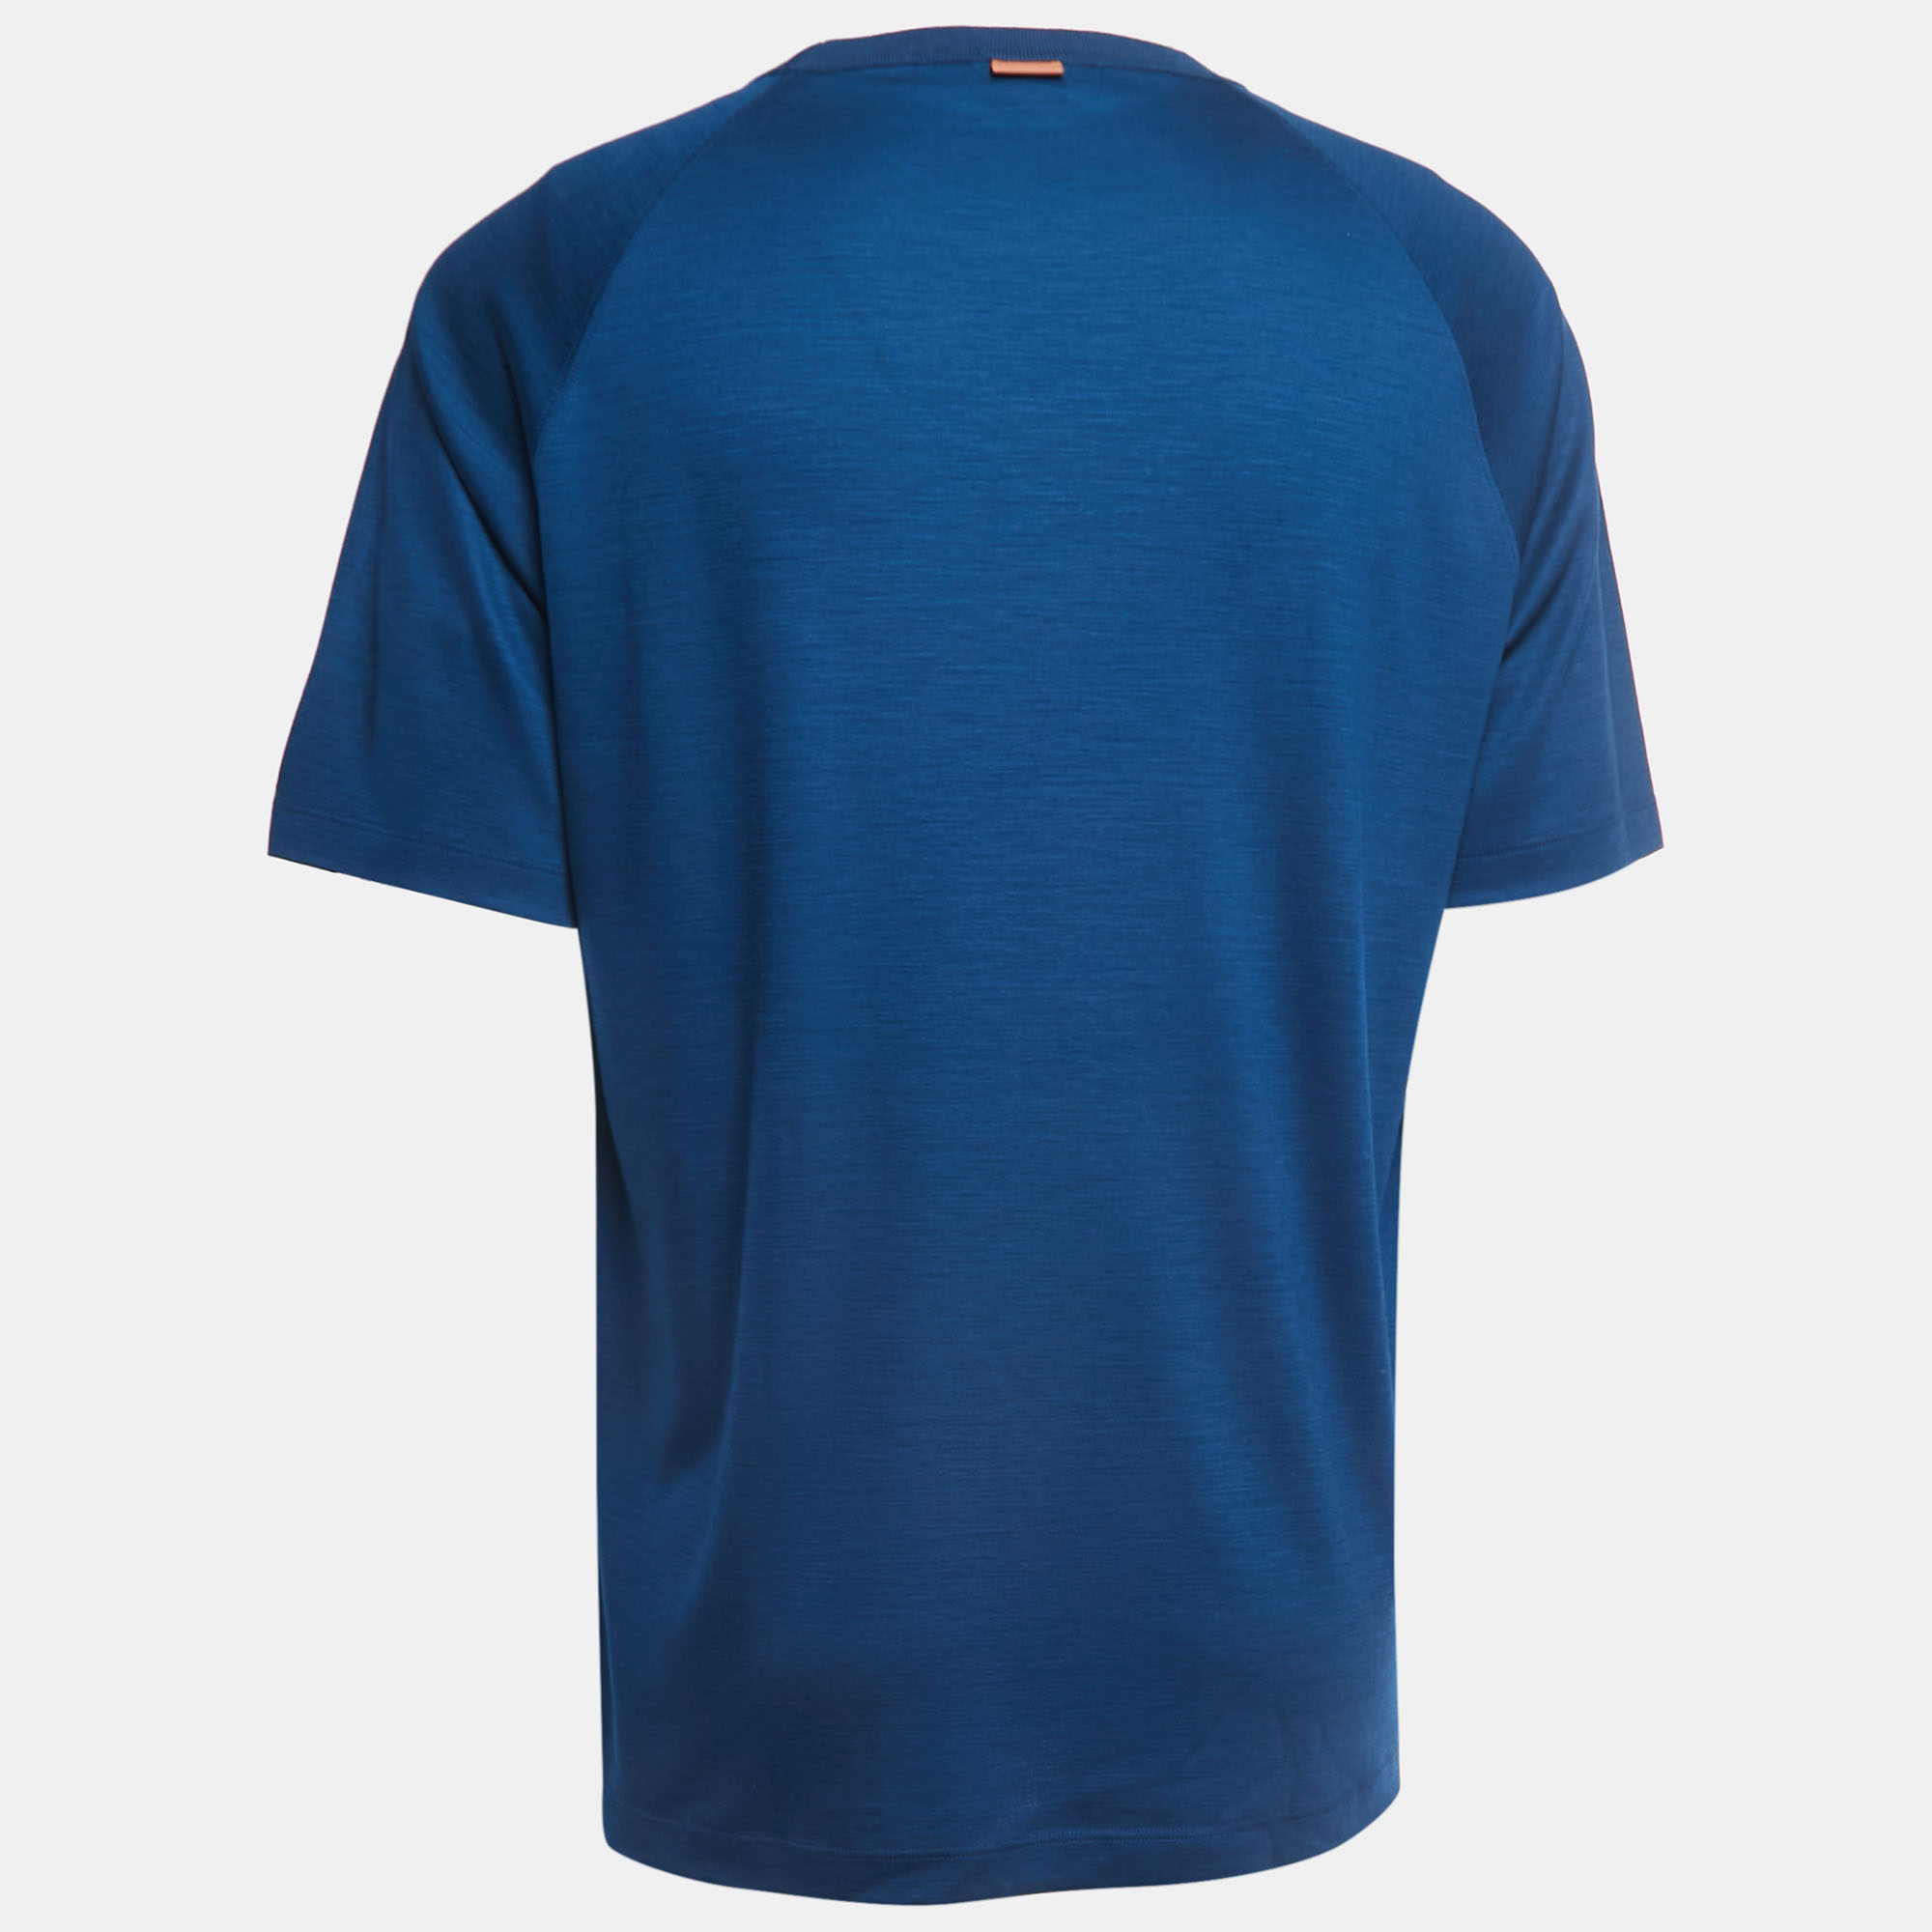 

Zegna Teal Blue Wool Crew Neck Half Sleeve T-Shirt